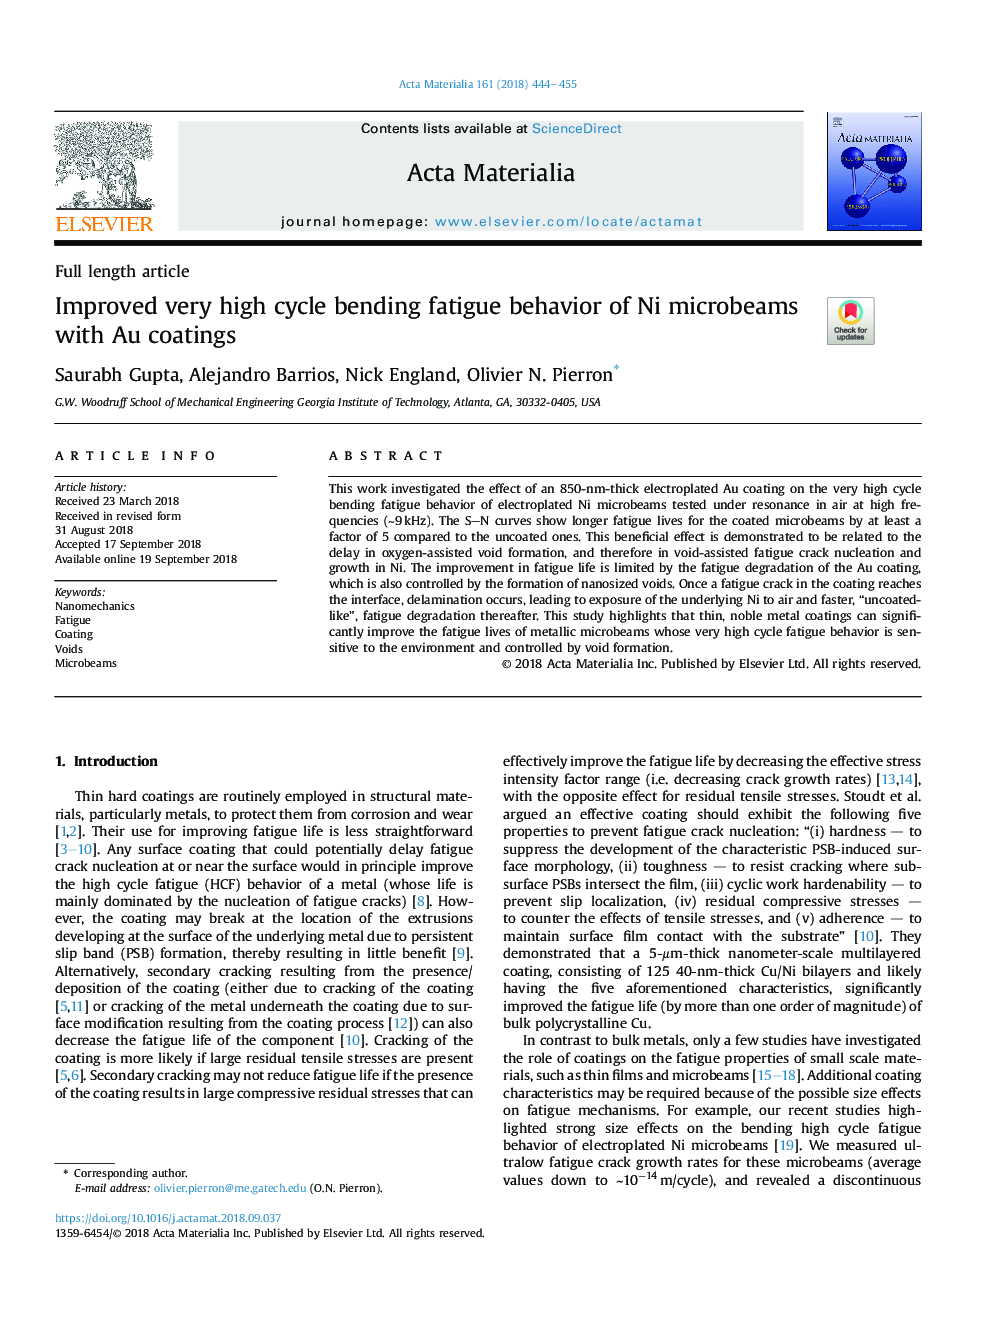 Improved very high cycle bending fatigue behavior of Ni microbeams with Au coatings